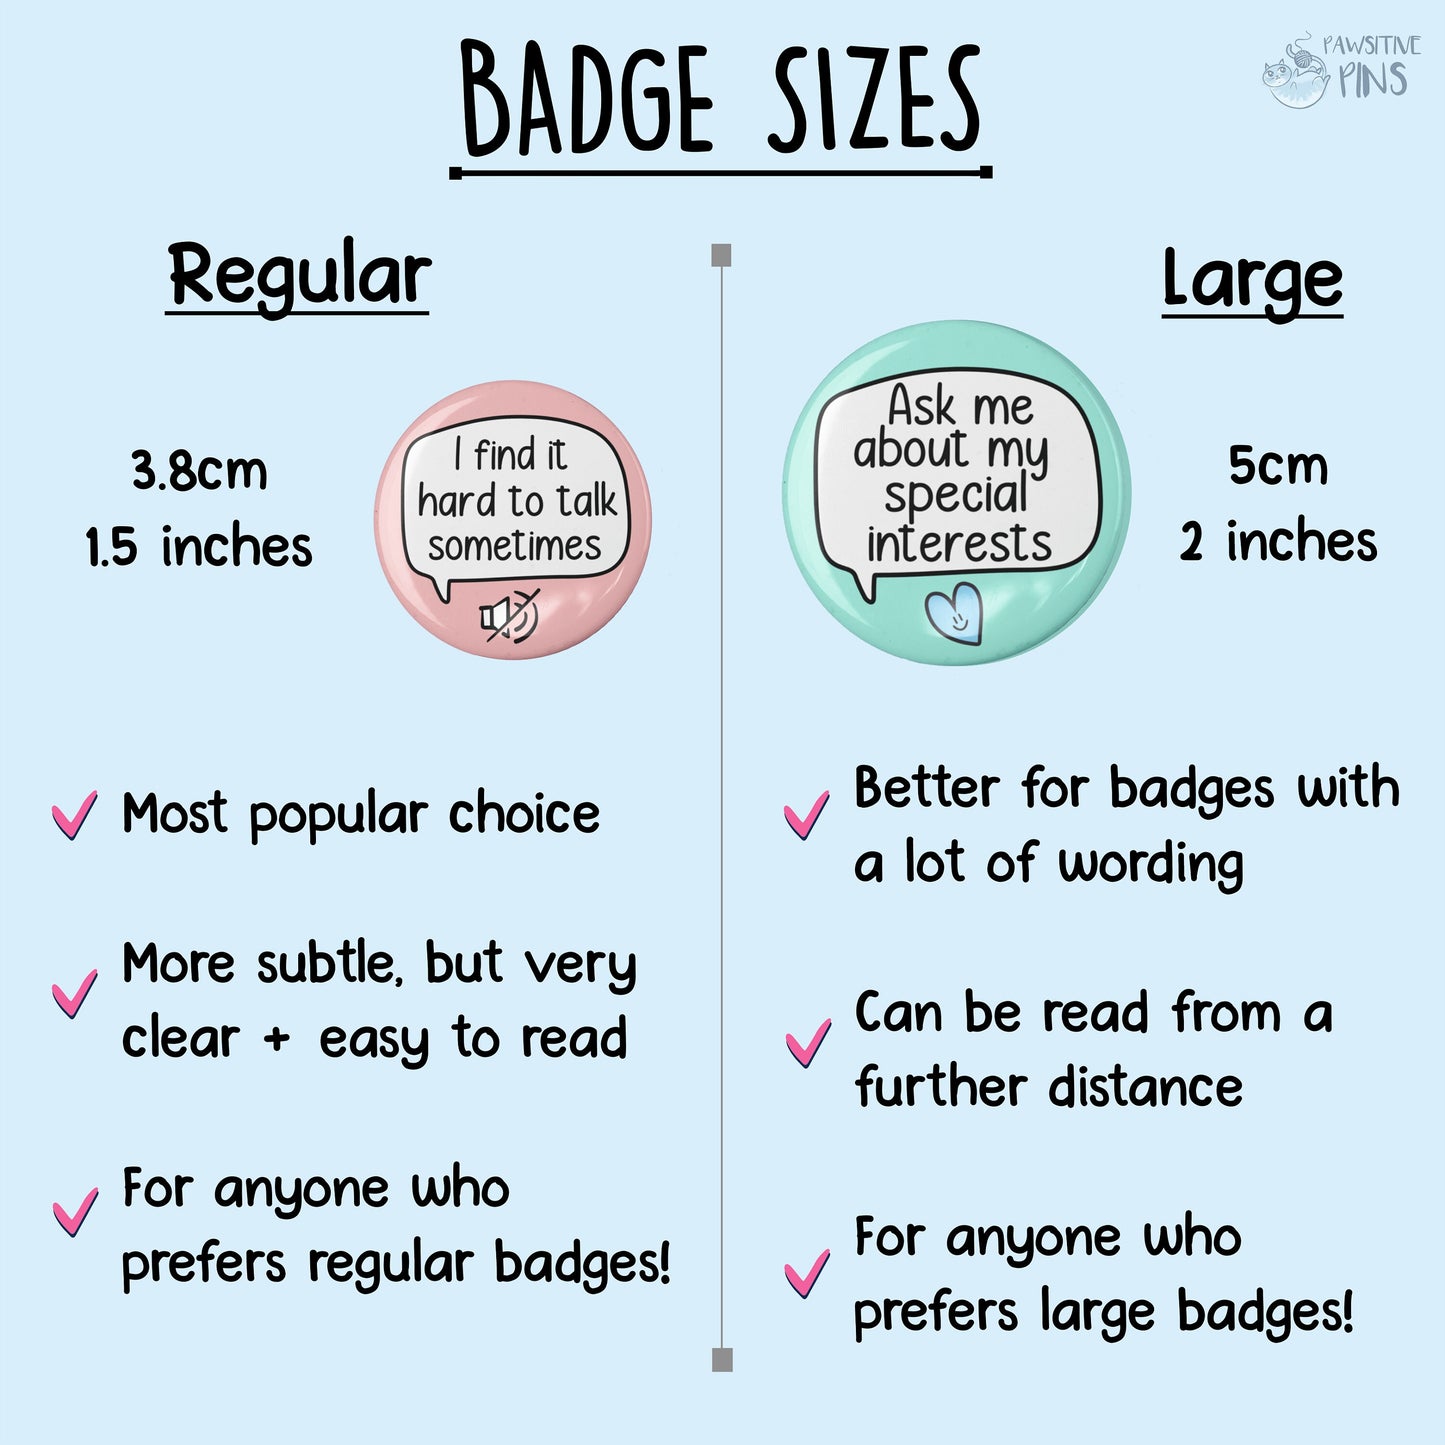 Respect My Pronouns Badge | Nonbinary Pin - Gender Badge - Trans Badge